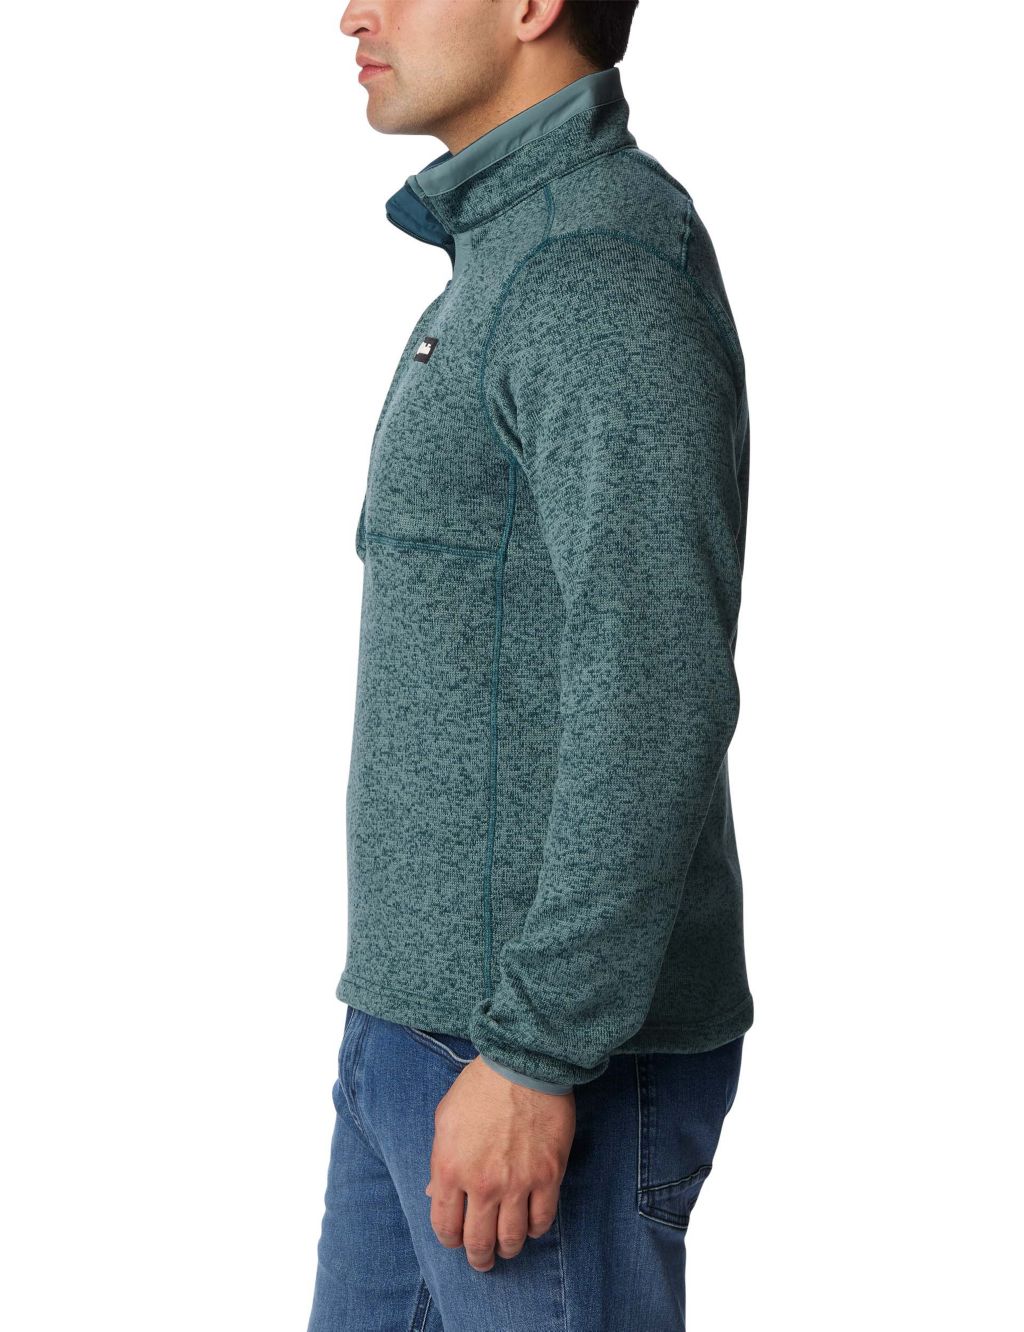 Sweater Weather Fleece Half Zip Jacket image 2